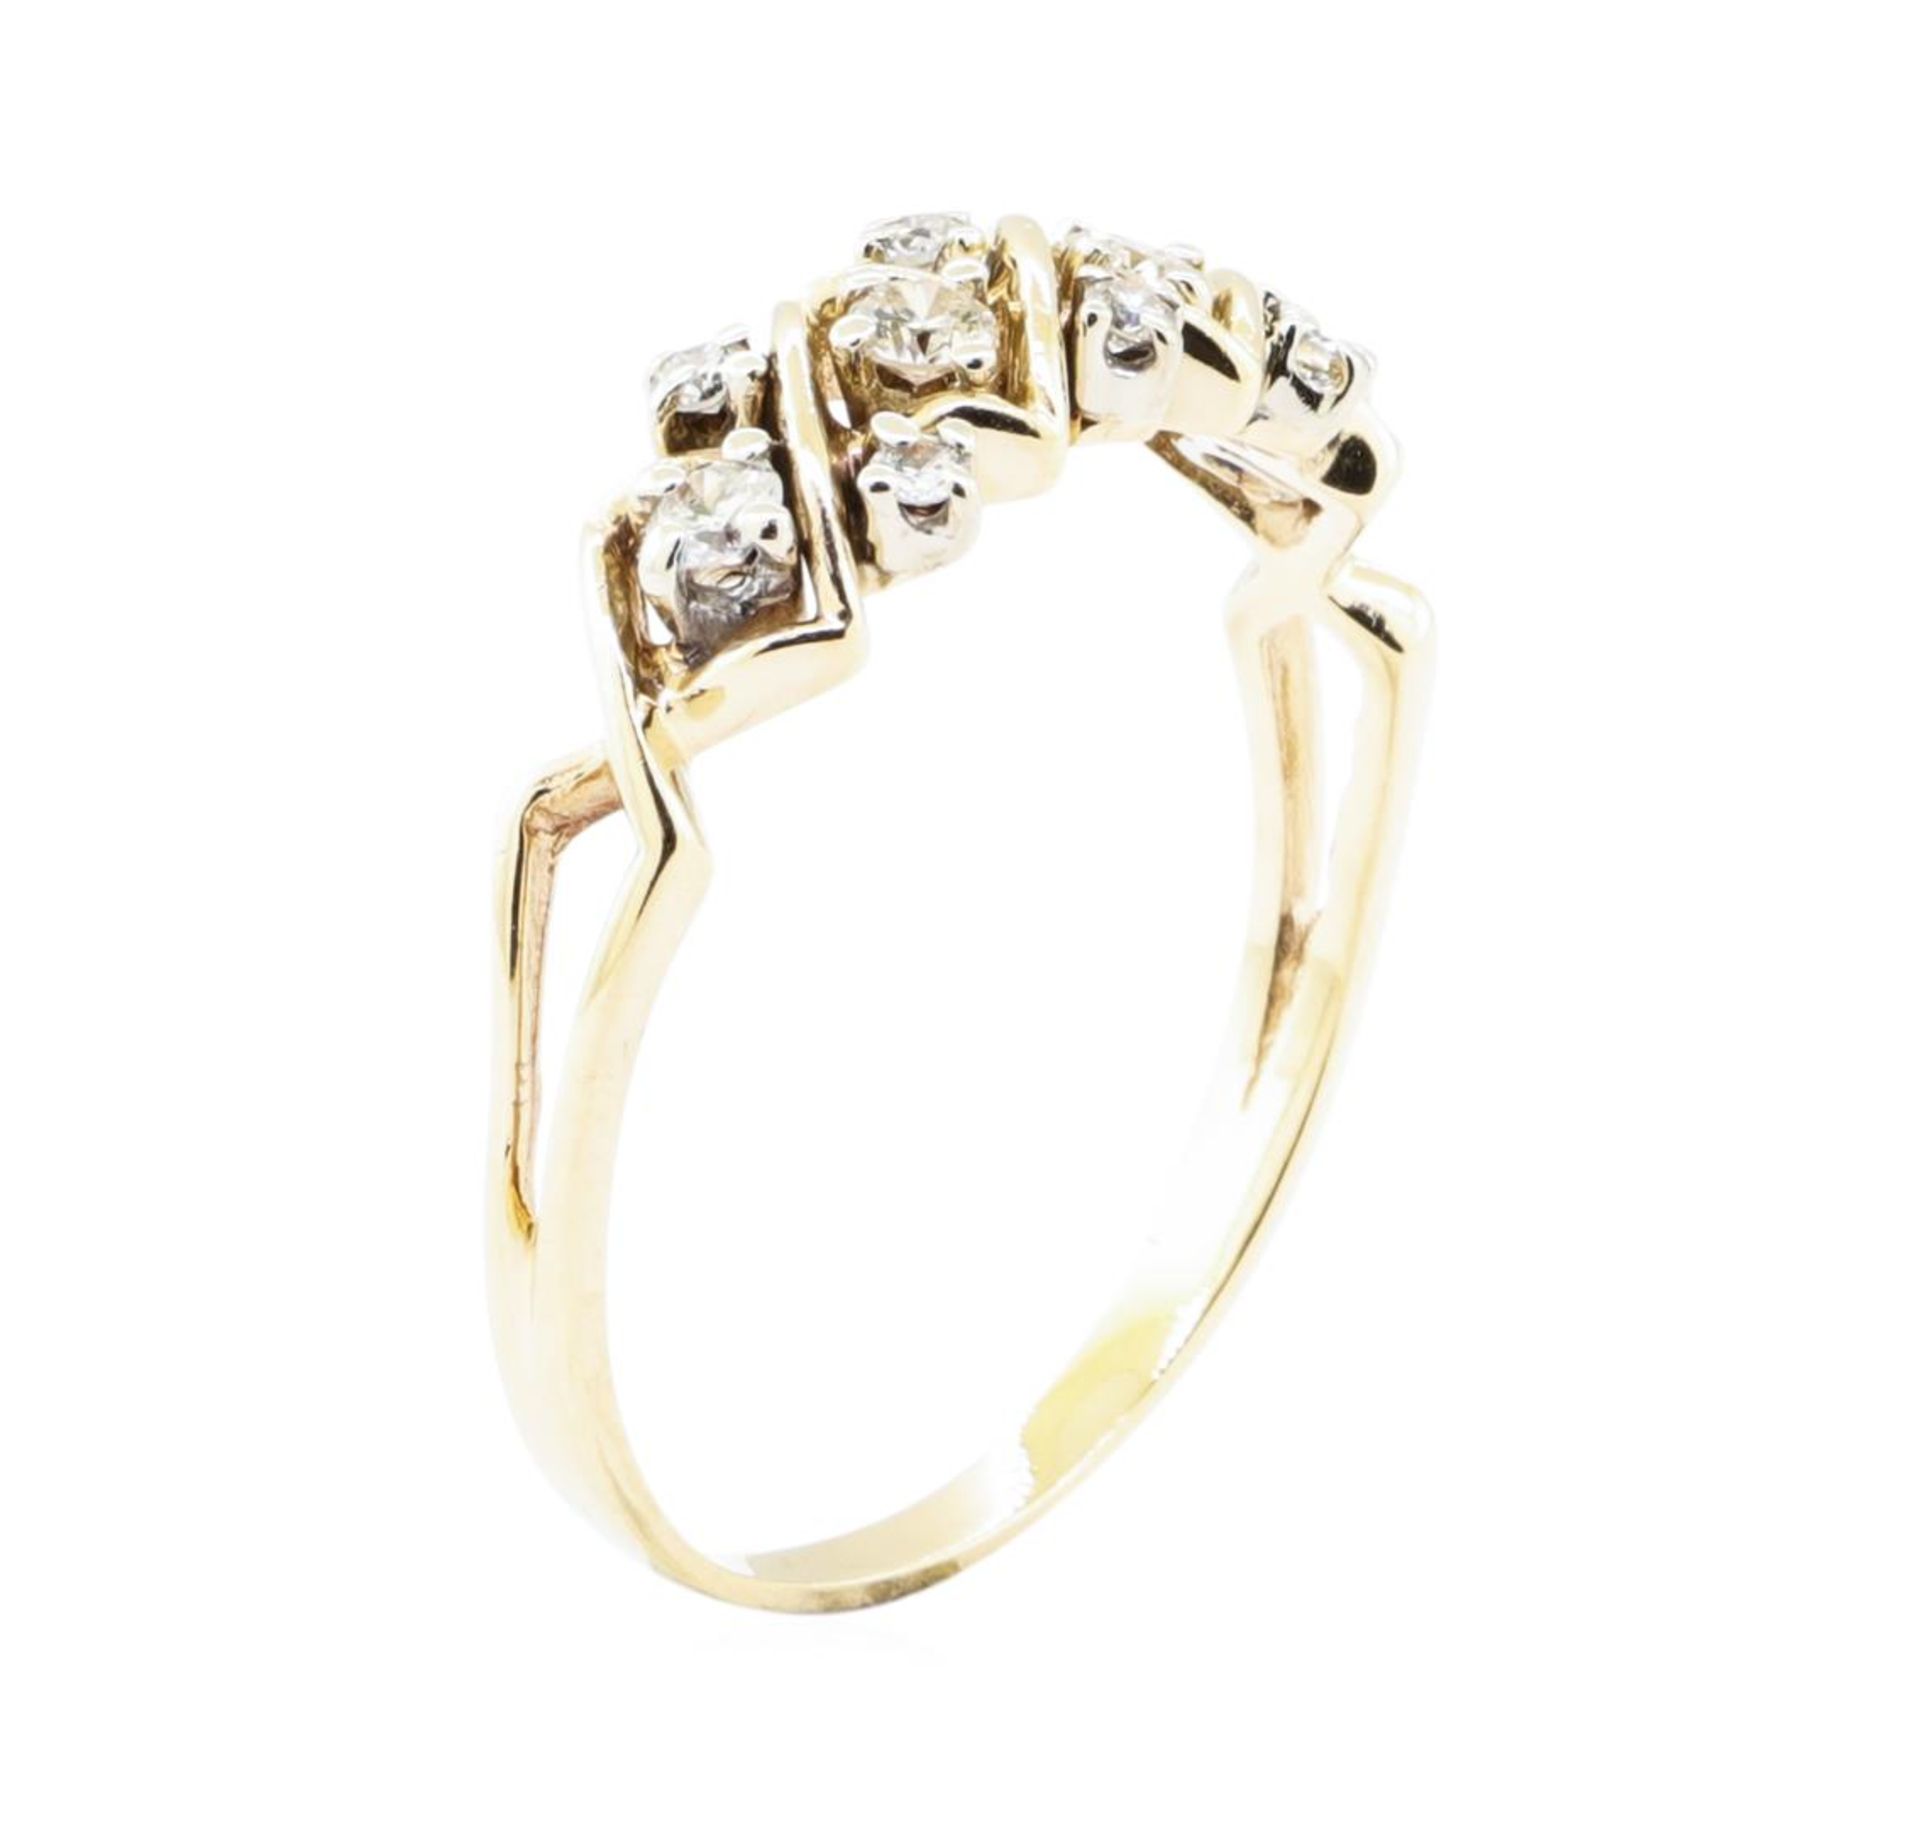 0.70 ctw Diamond Ring - 14KT Yellow Gold - Image 4 of 4